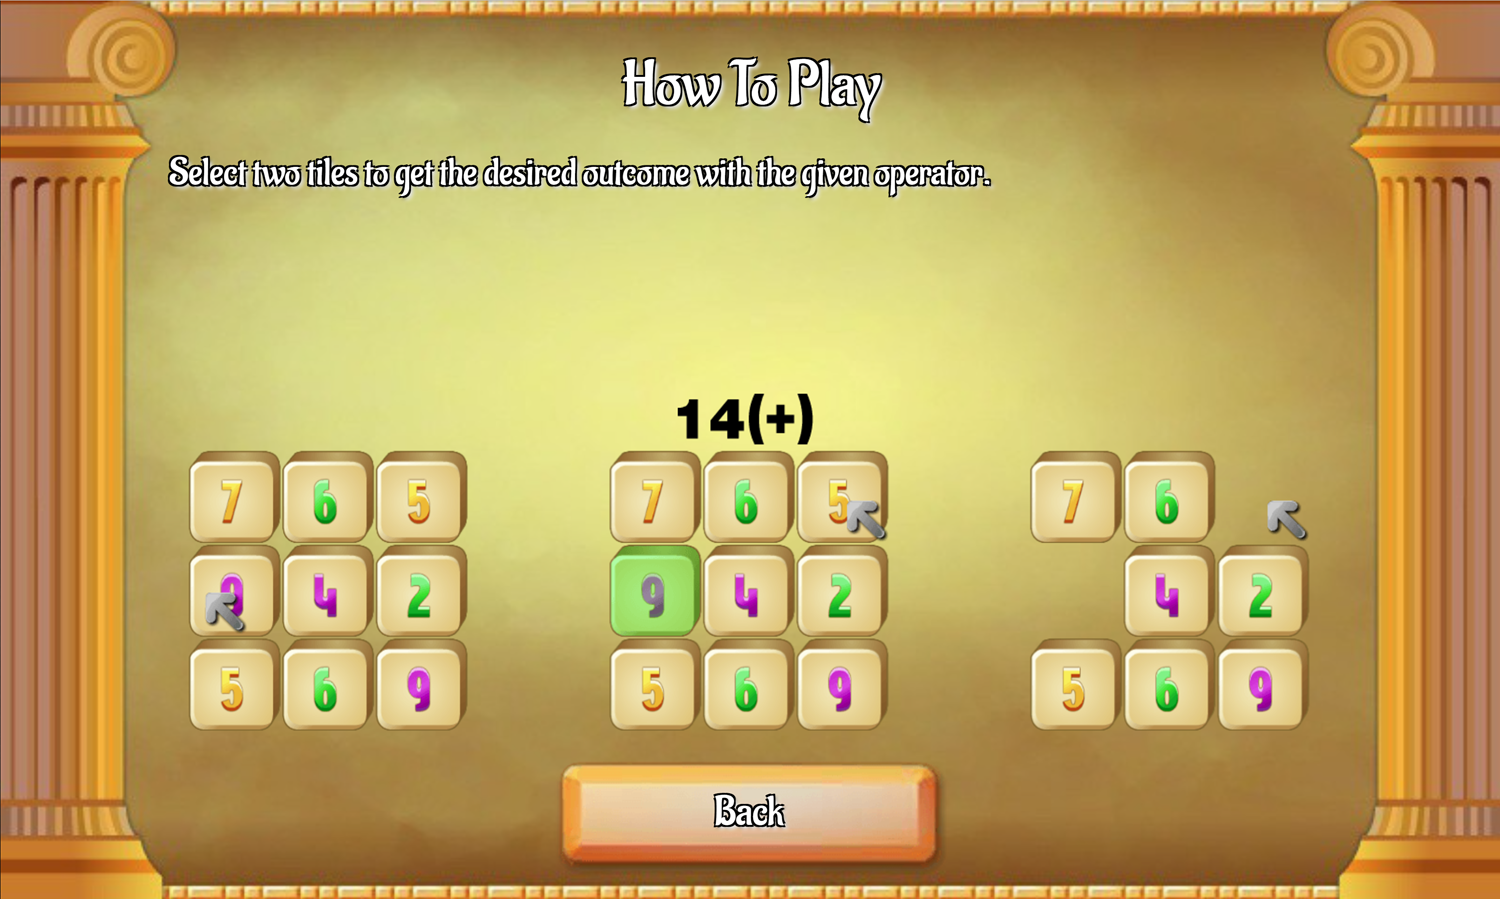 Jolly Jong Math Game How to Play Screen Screenshot.